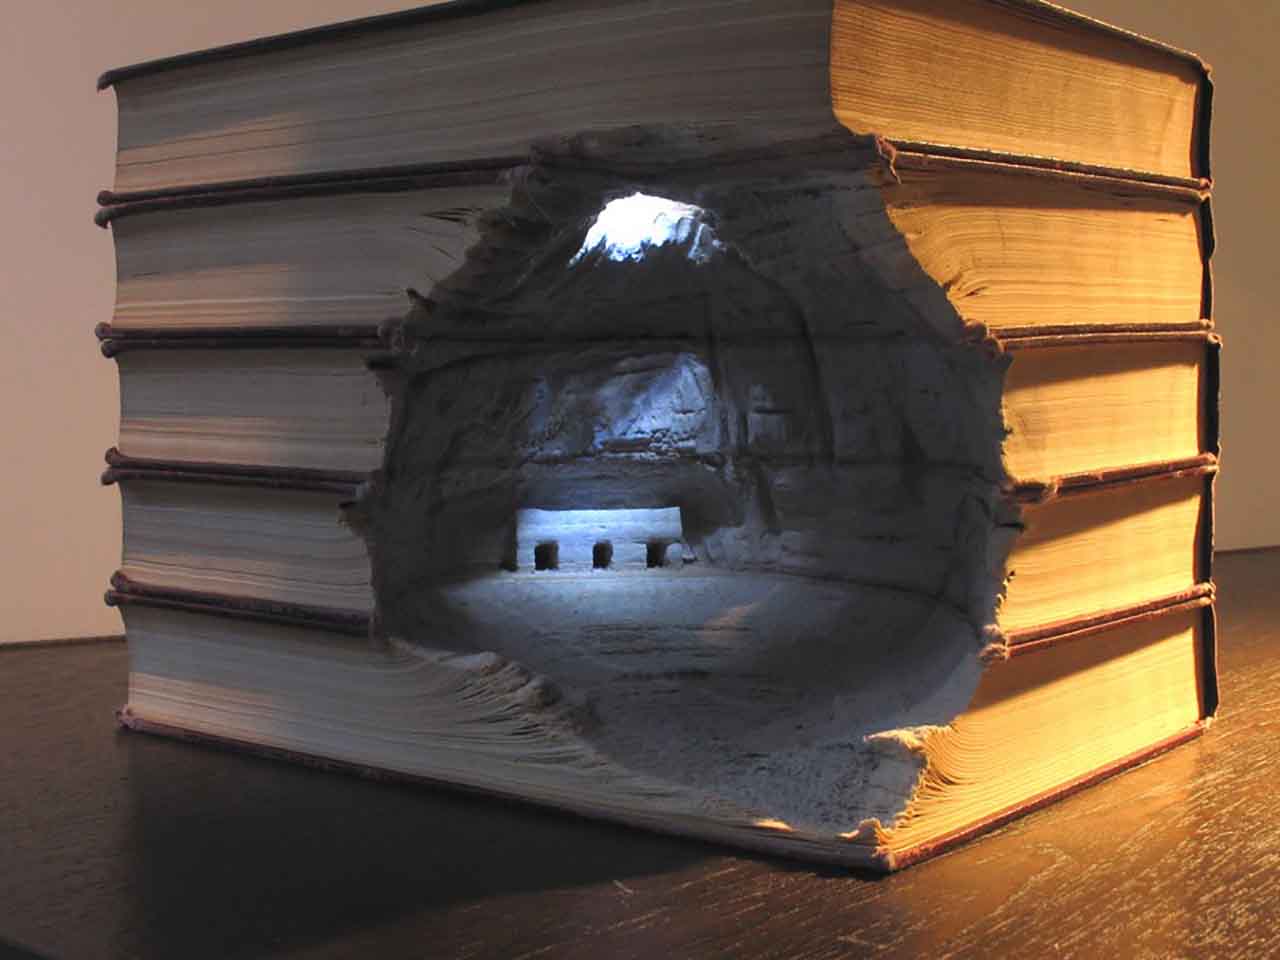 Guy Laramée Carved Book Art